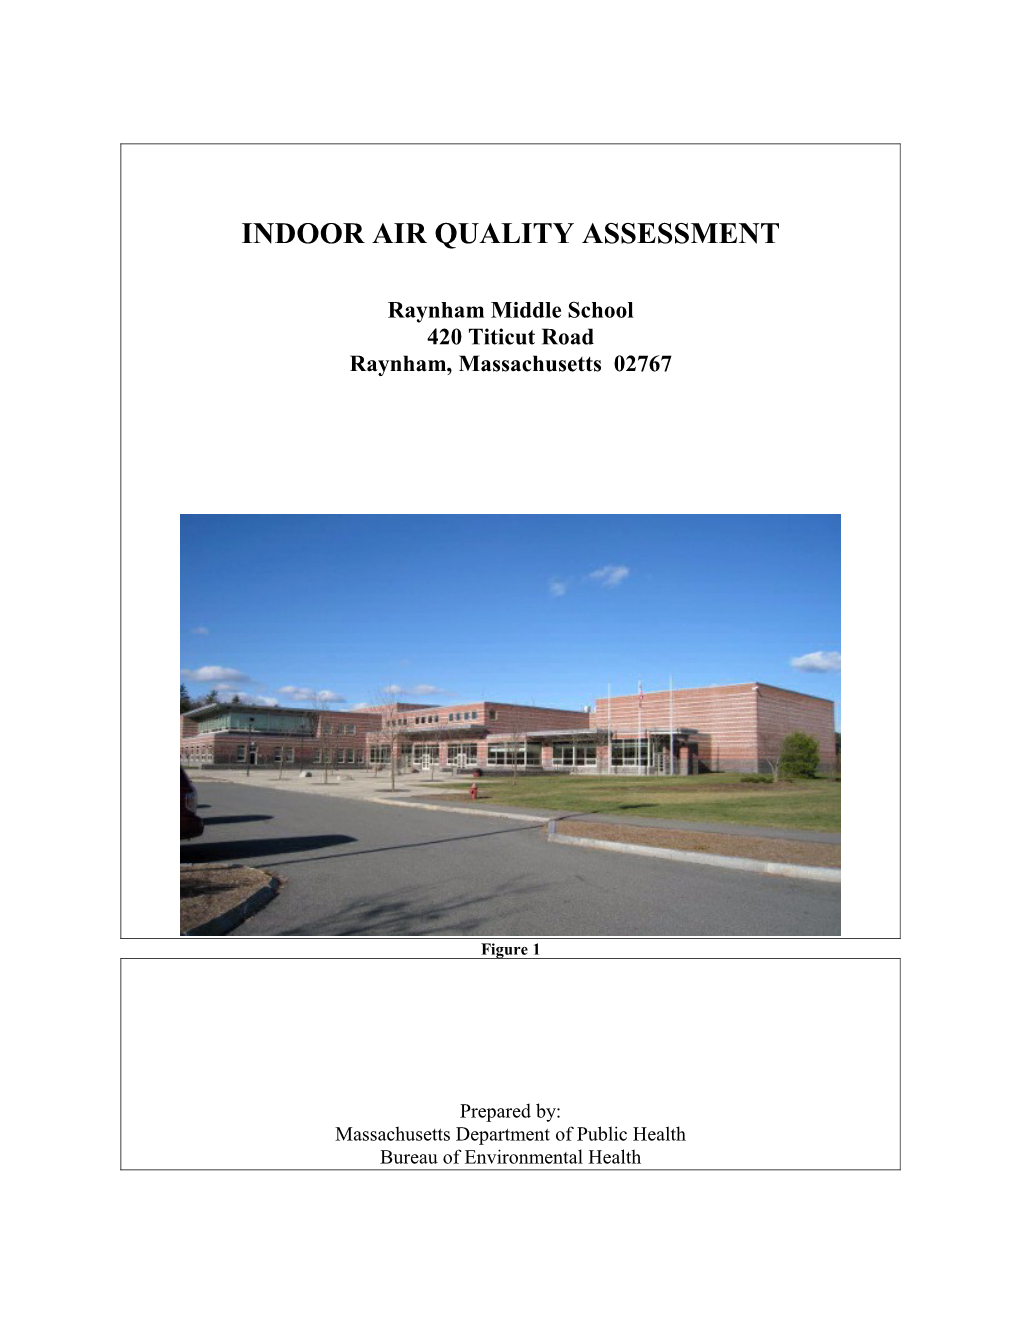 INDOOR AIR QUALITY ASSESSMENT - Raynham Middle School, Raynham, Massachusetts